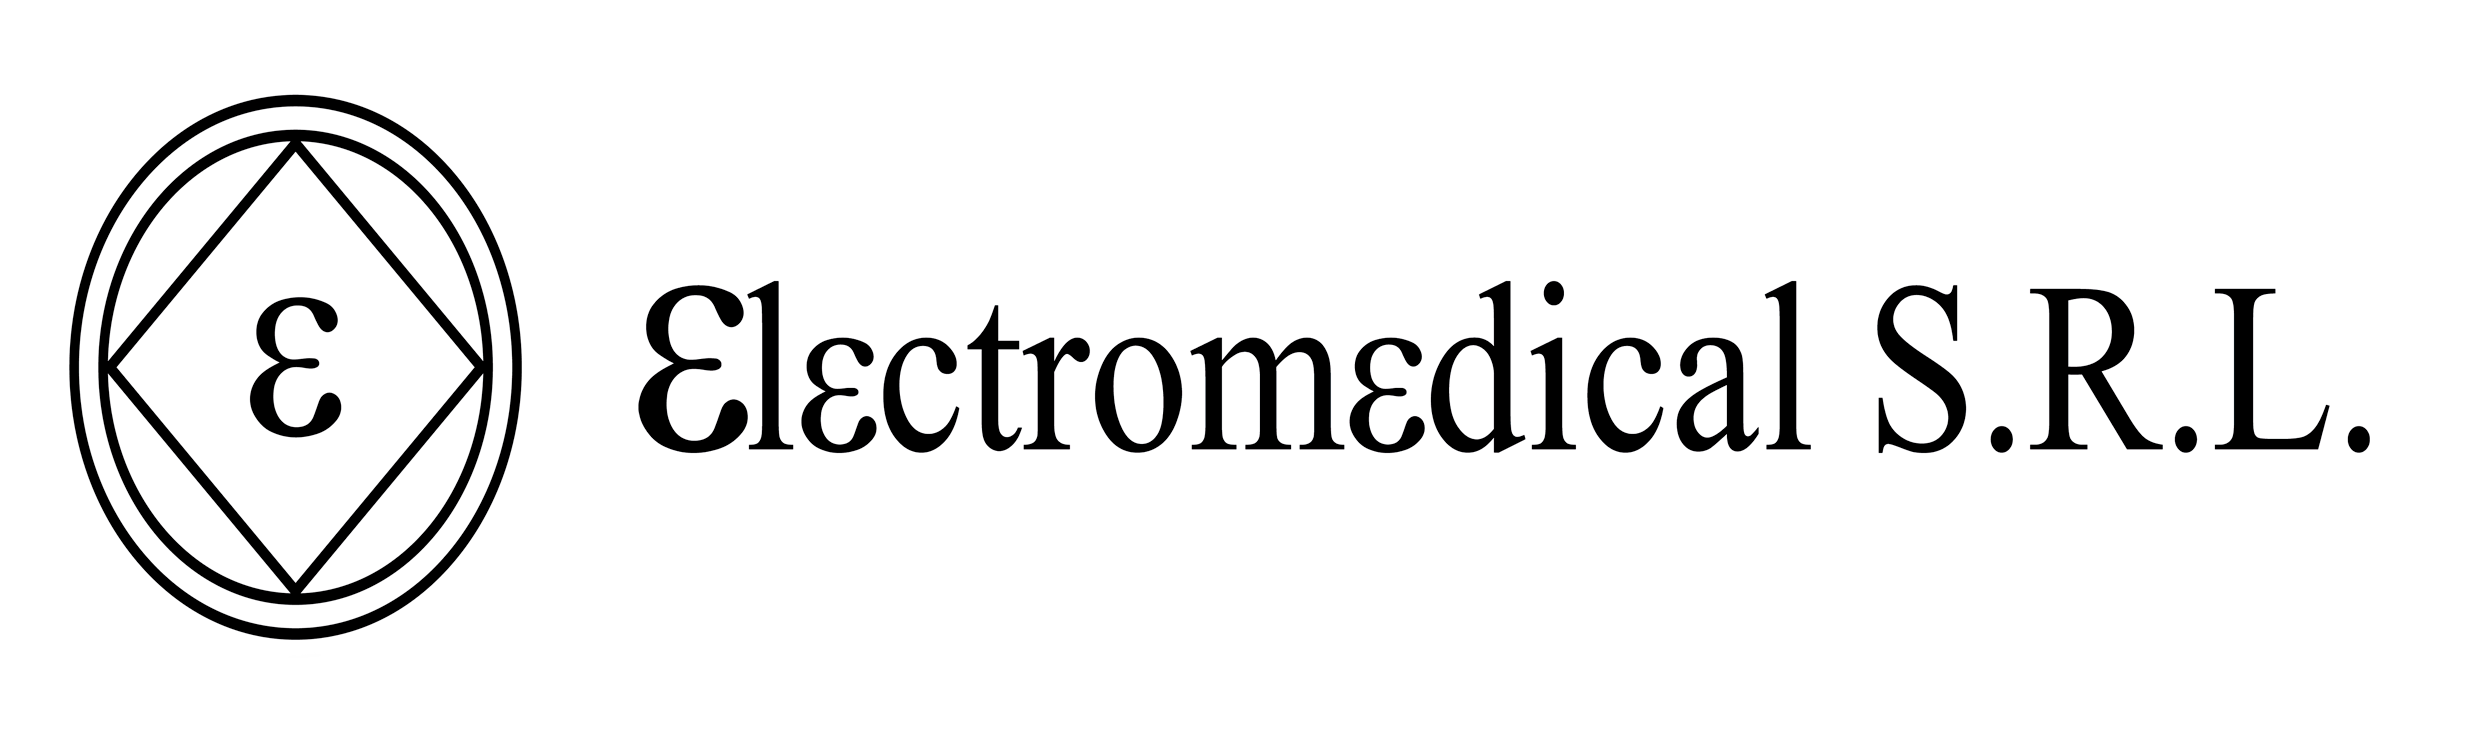 Electromedical S.R.L